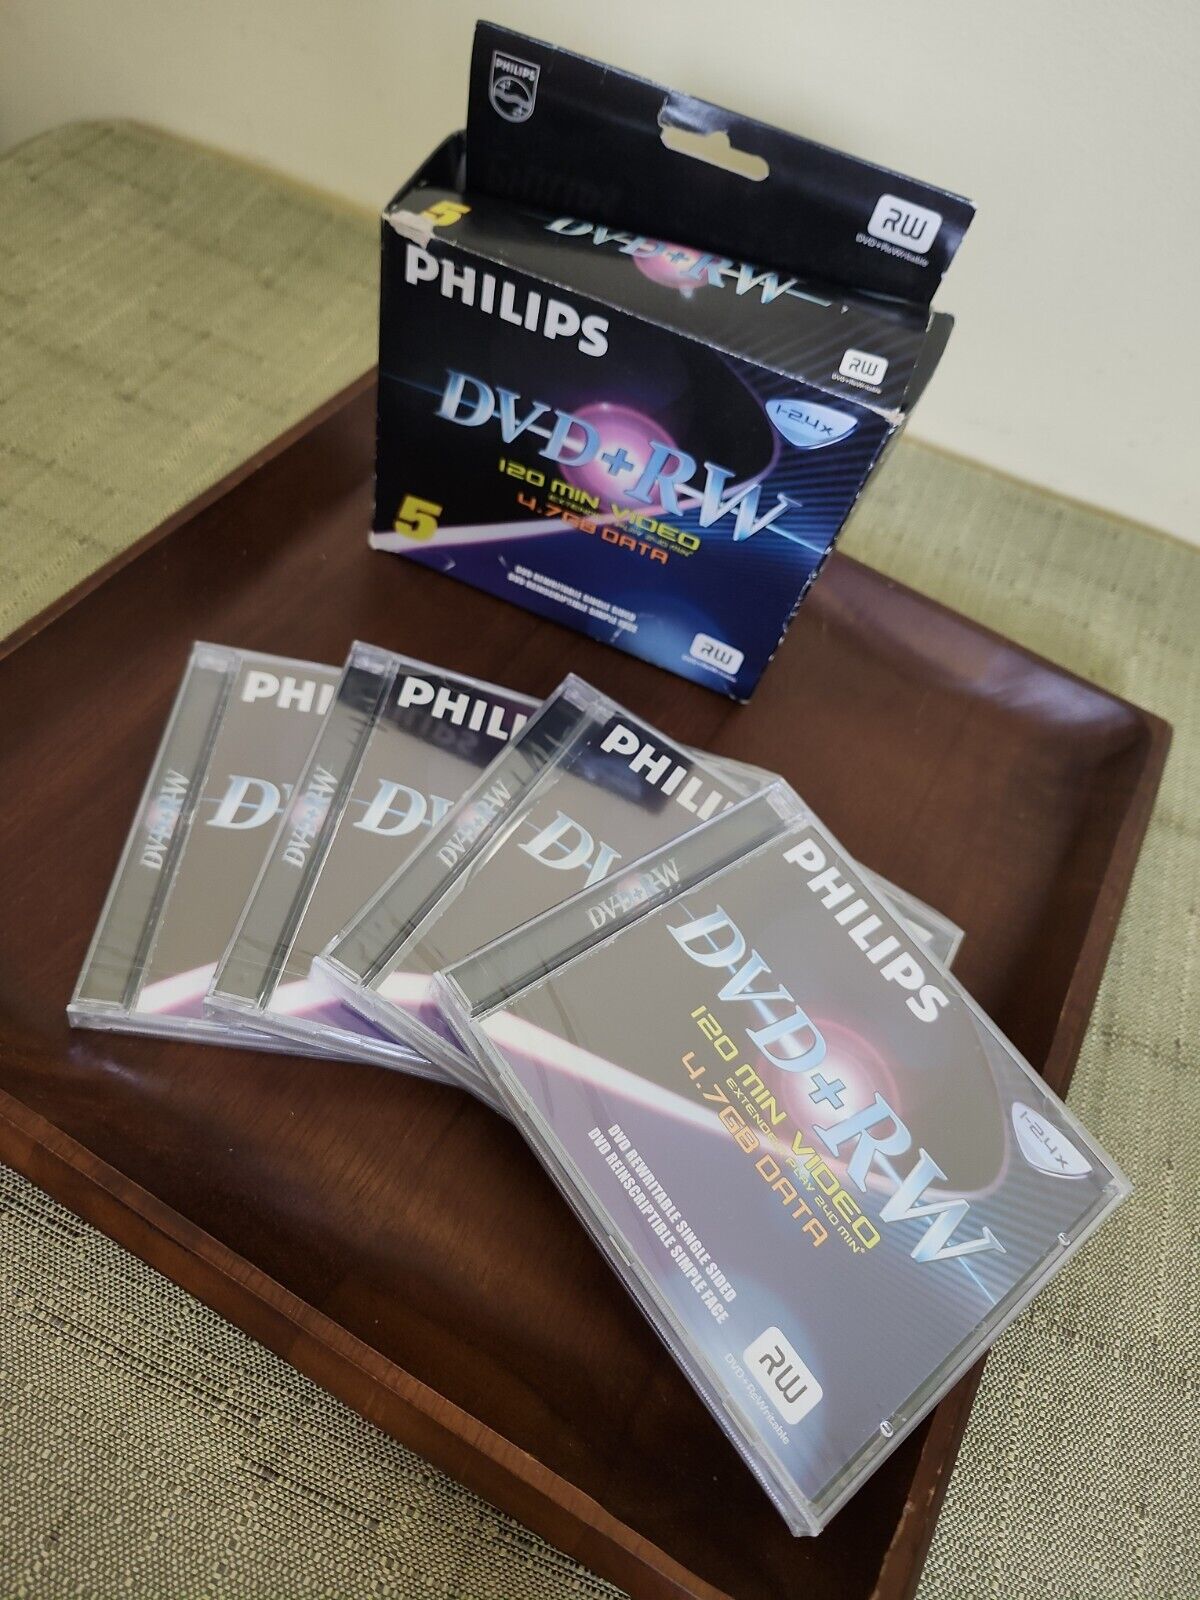 4 New Philips DVD + RW 120 Min Video Disk 4.7 GB Data DVD Rewritable Single Side